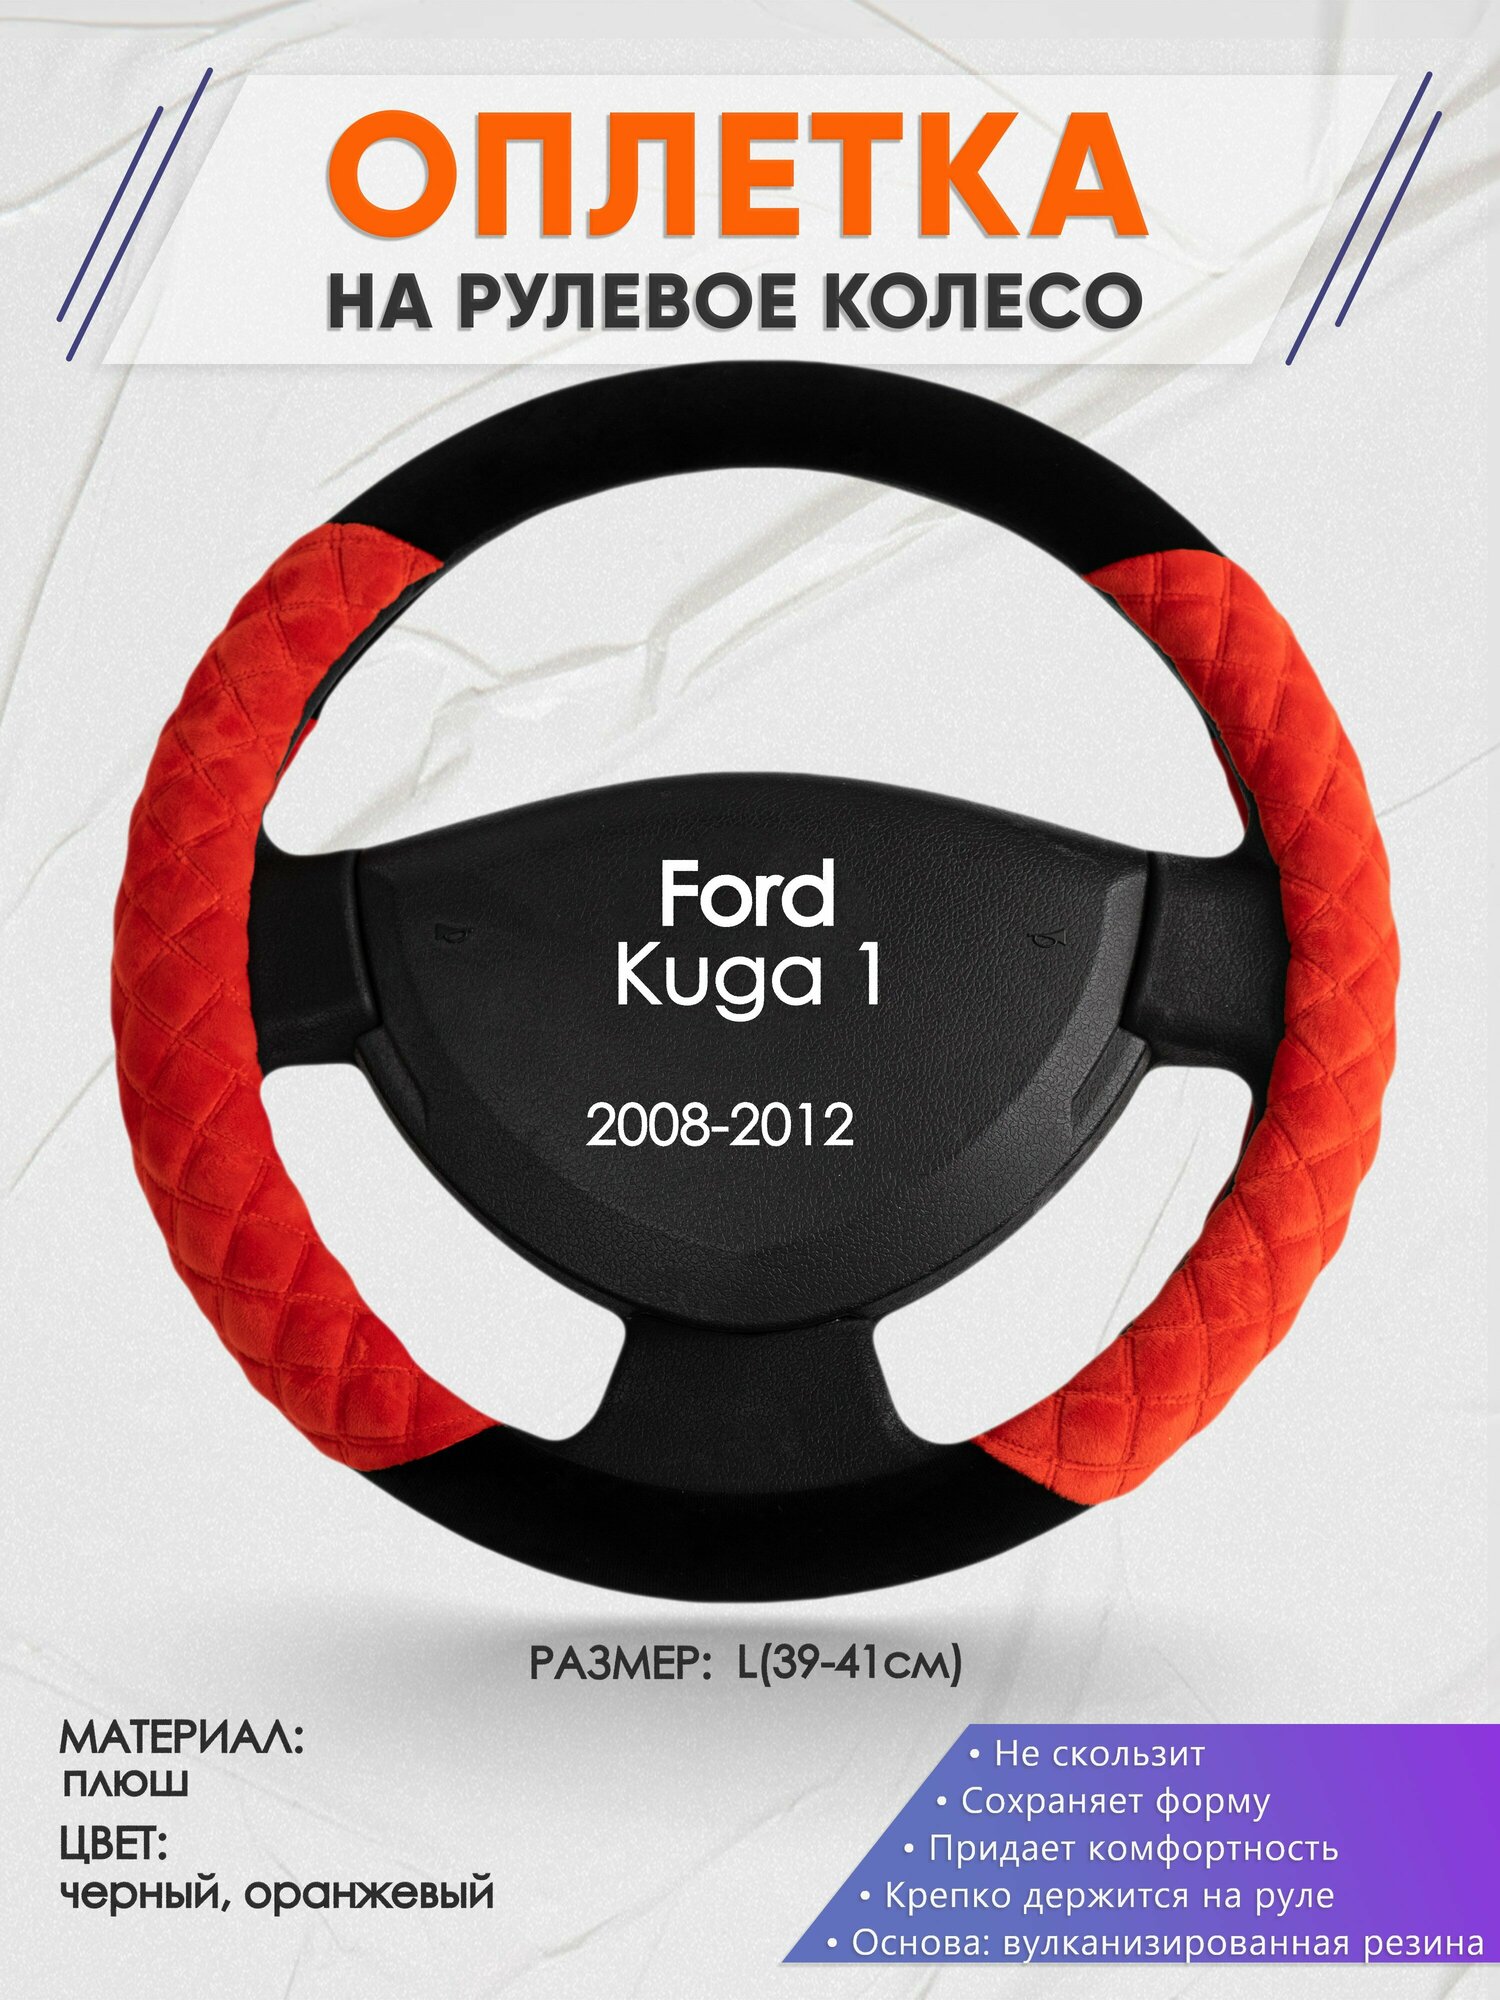 Оплетка на руль для Ford Kuga 1(Форд Куга 1) 2008-2012, L(39-41см), Замша 37